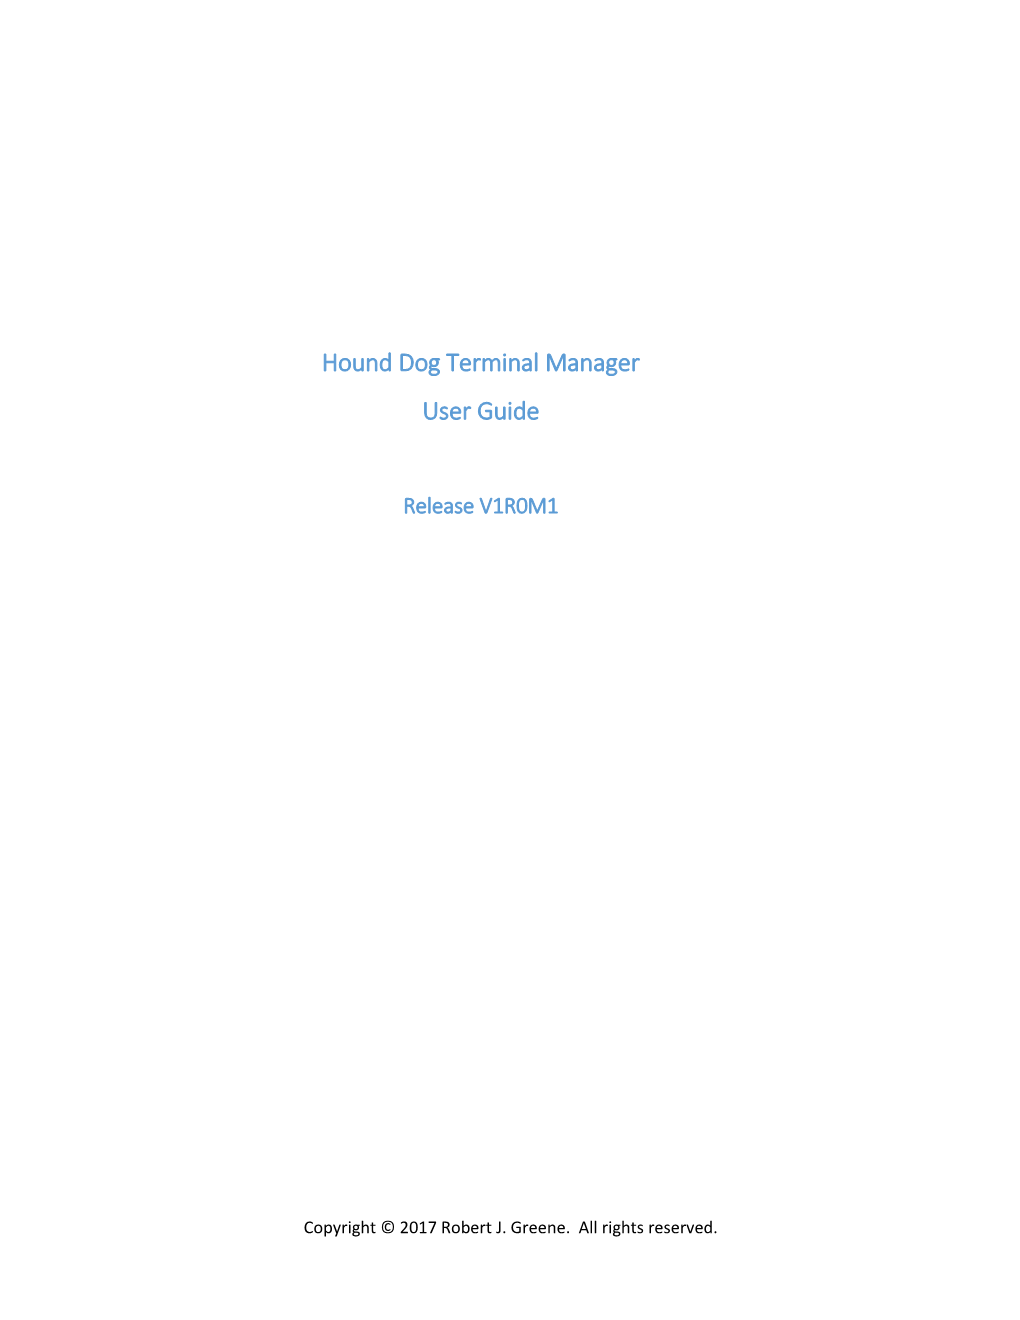 Hound Dog Terminal Manager User Guide